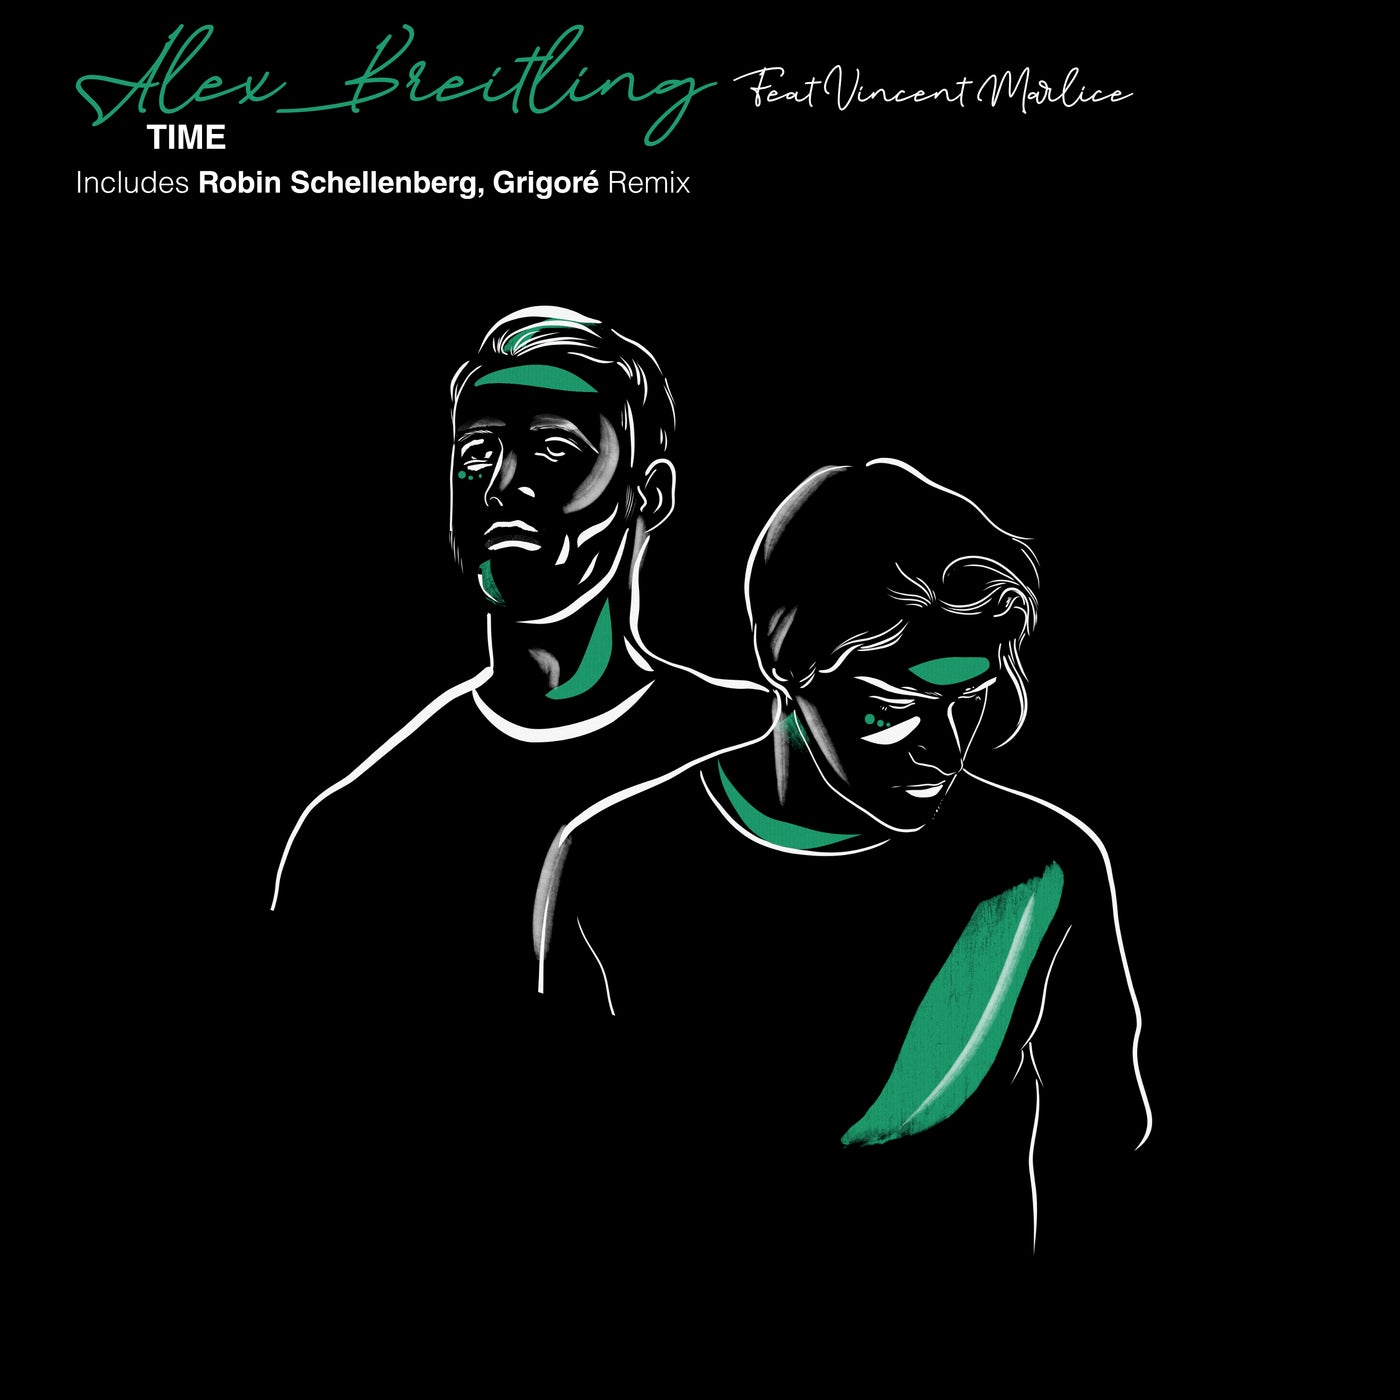 Alex Breitling & Vincent Marlice - Time EP [SMTC057]